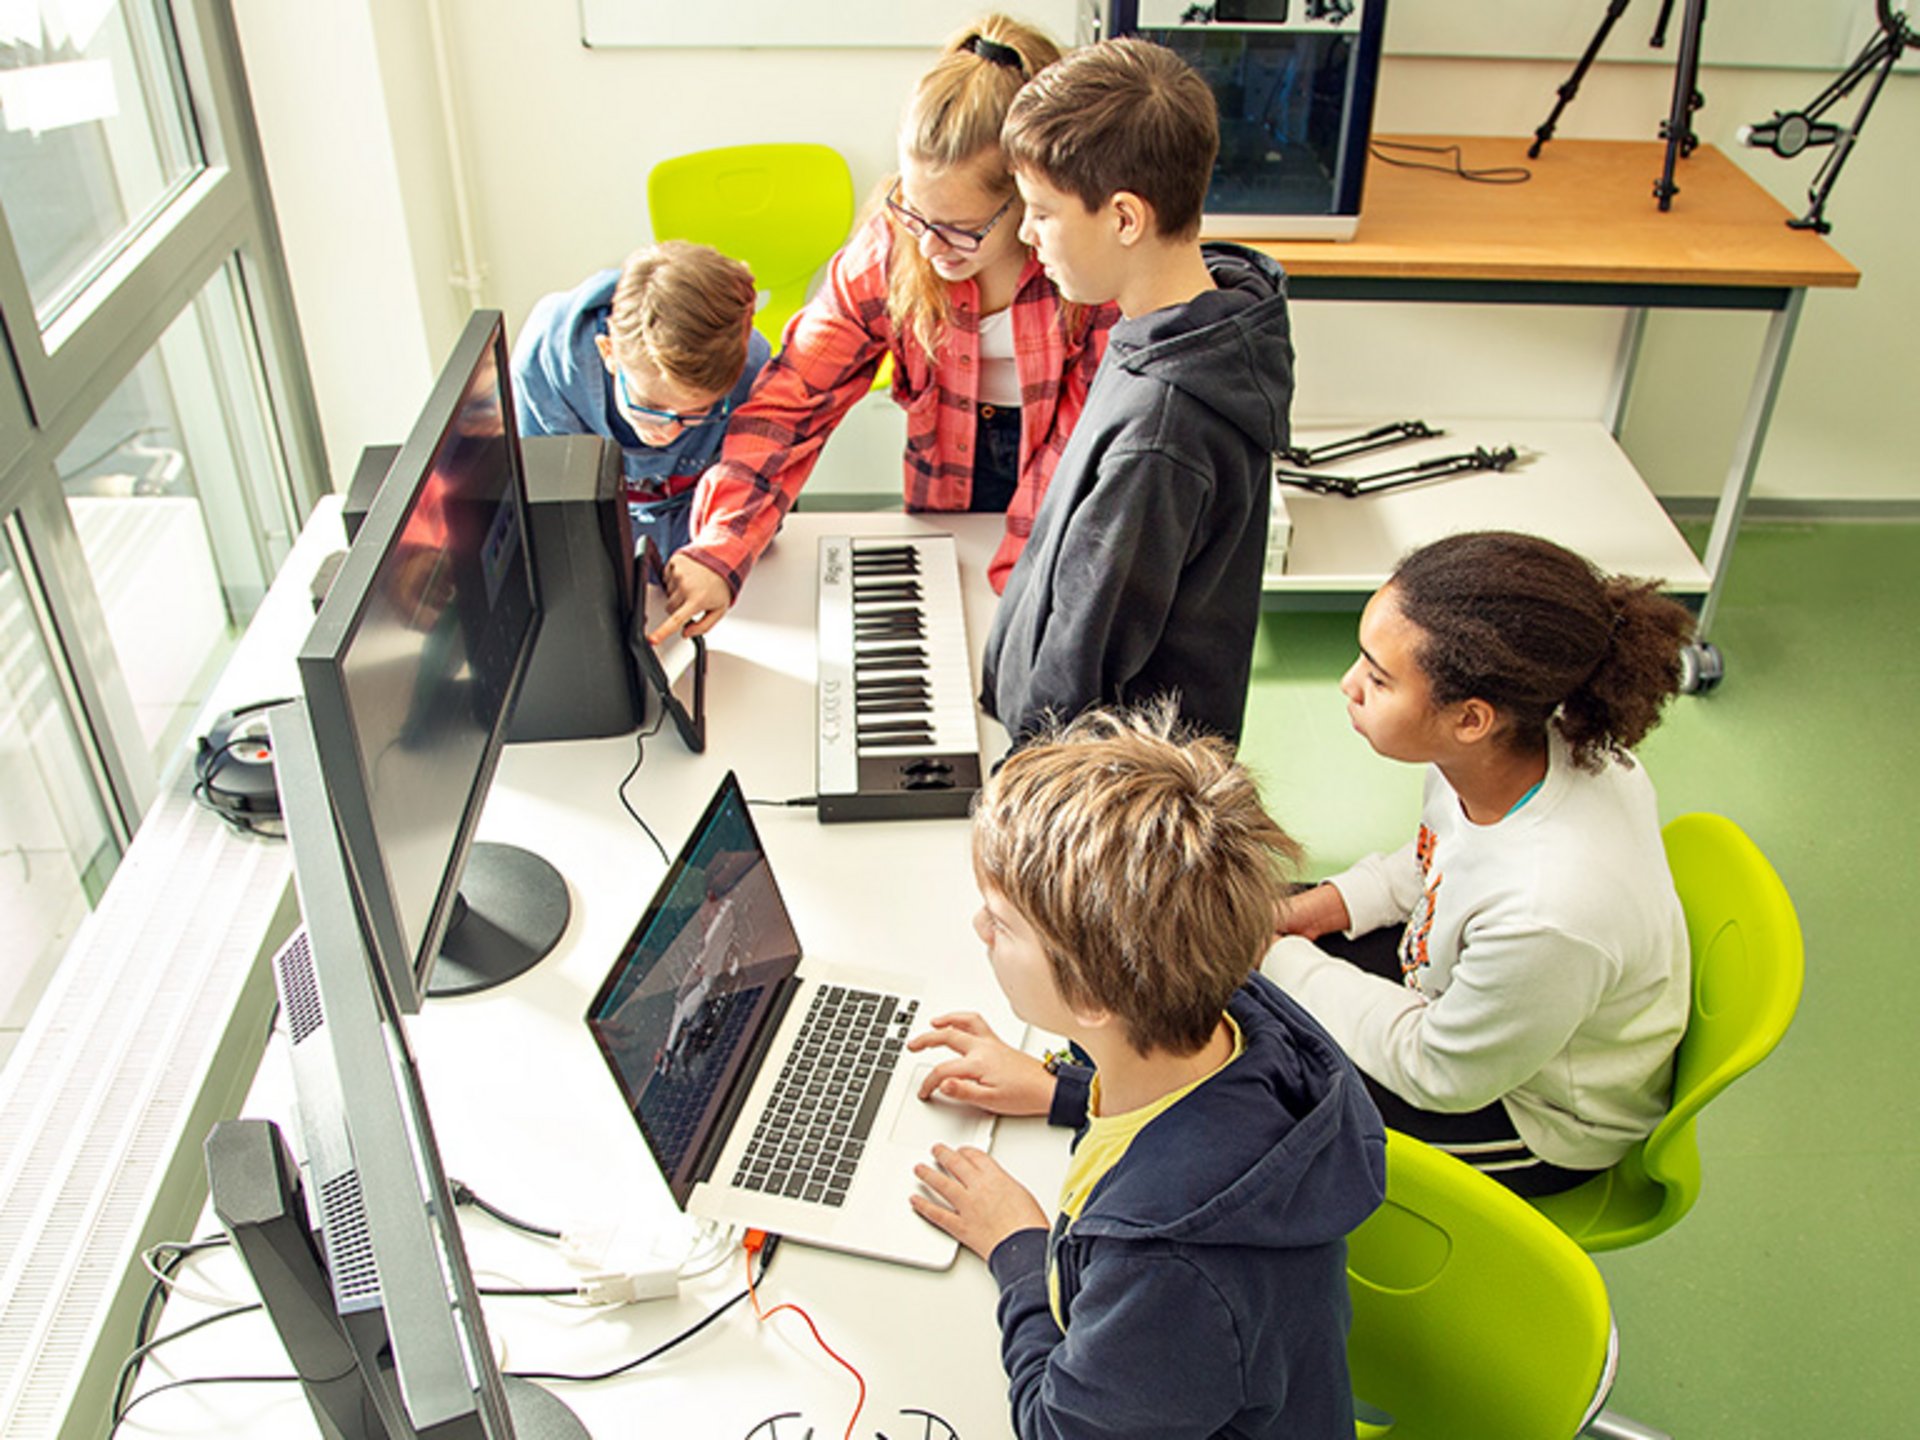 Bild: Schüler gemeinsam im Makerspace Video Audio Editing